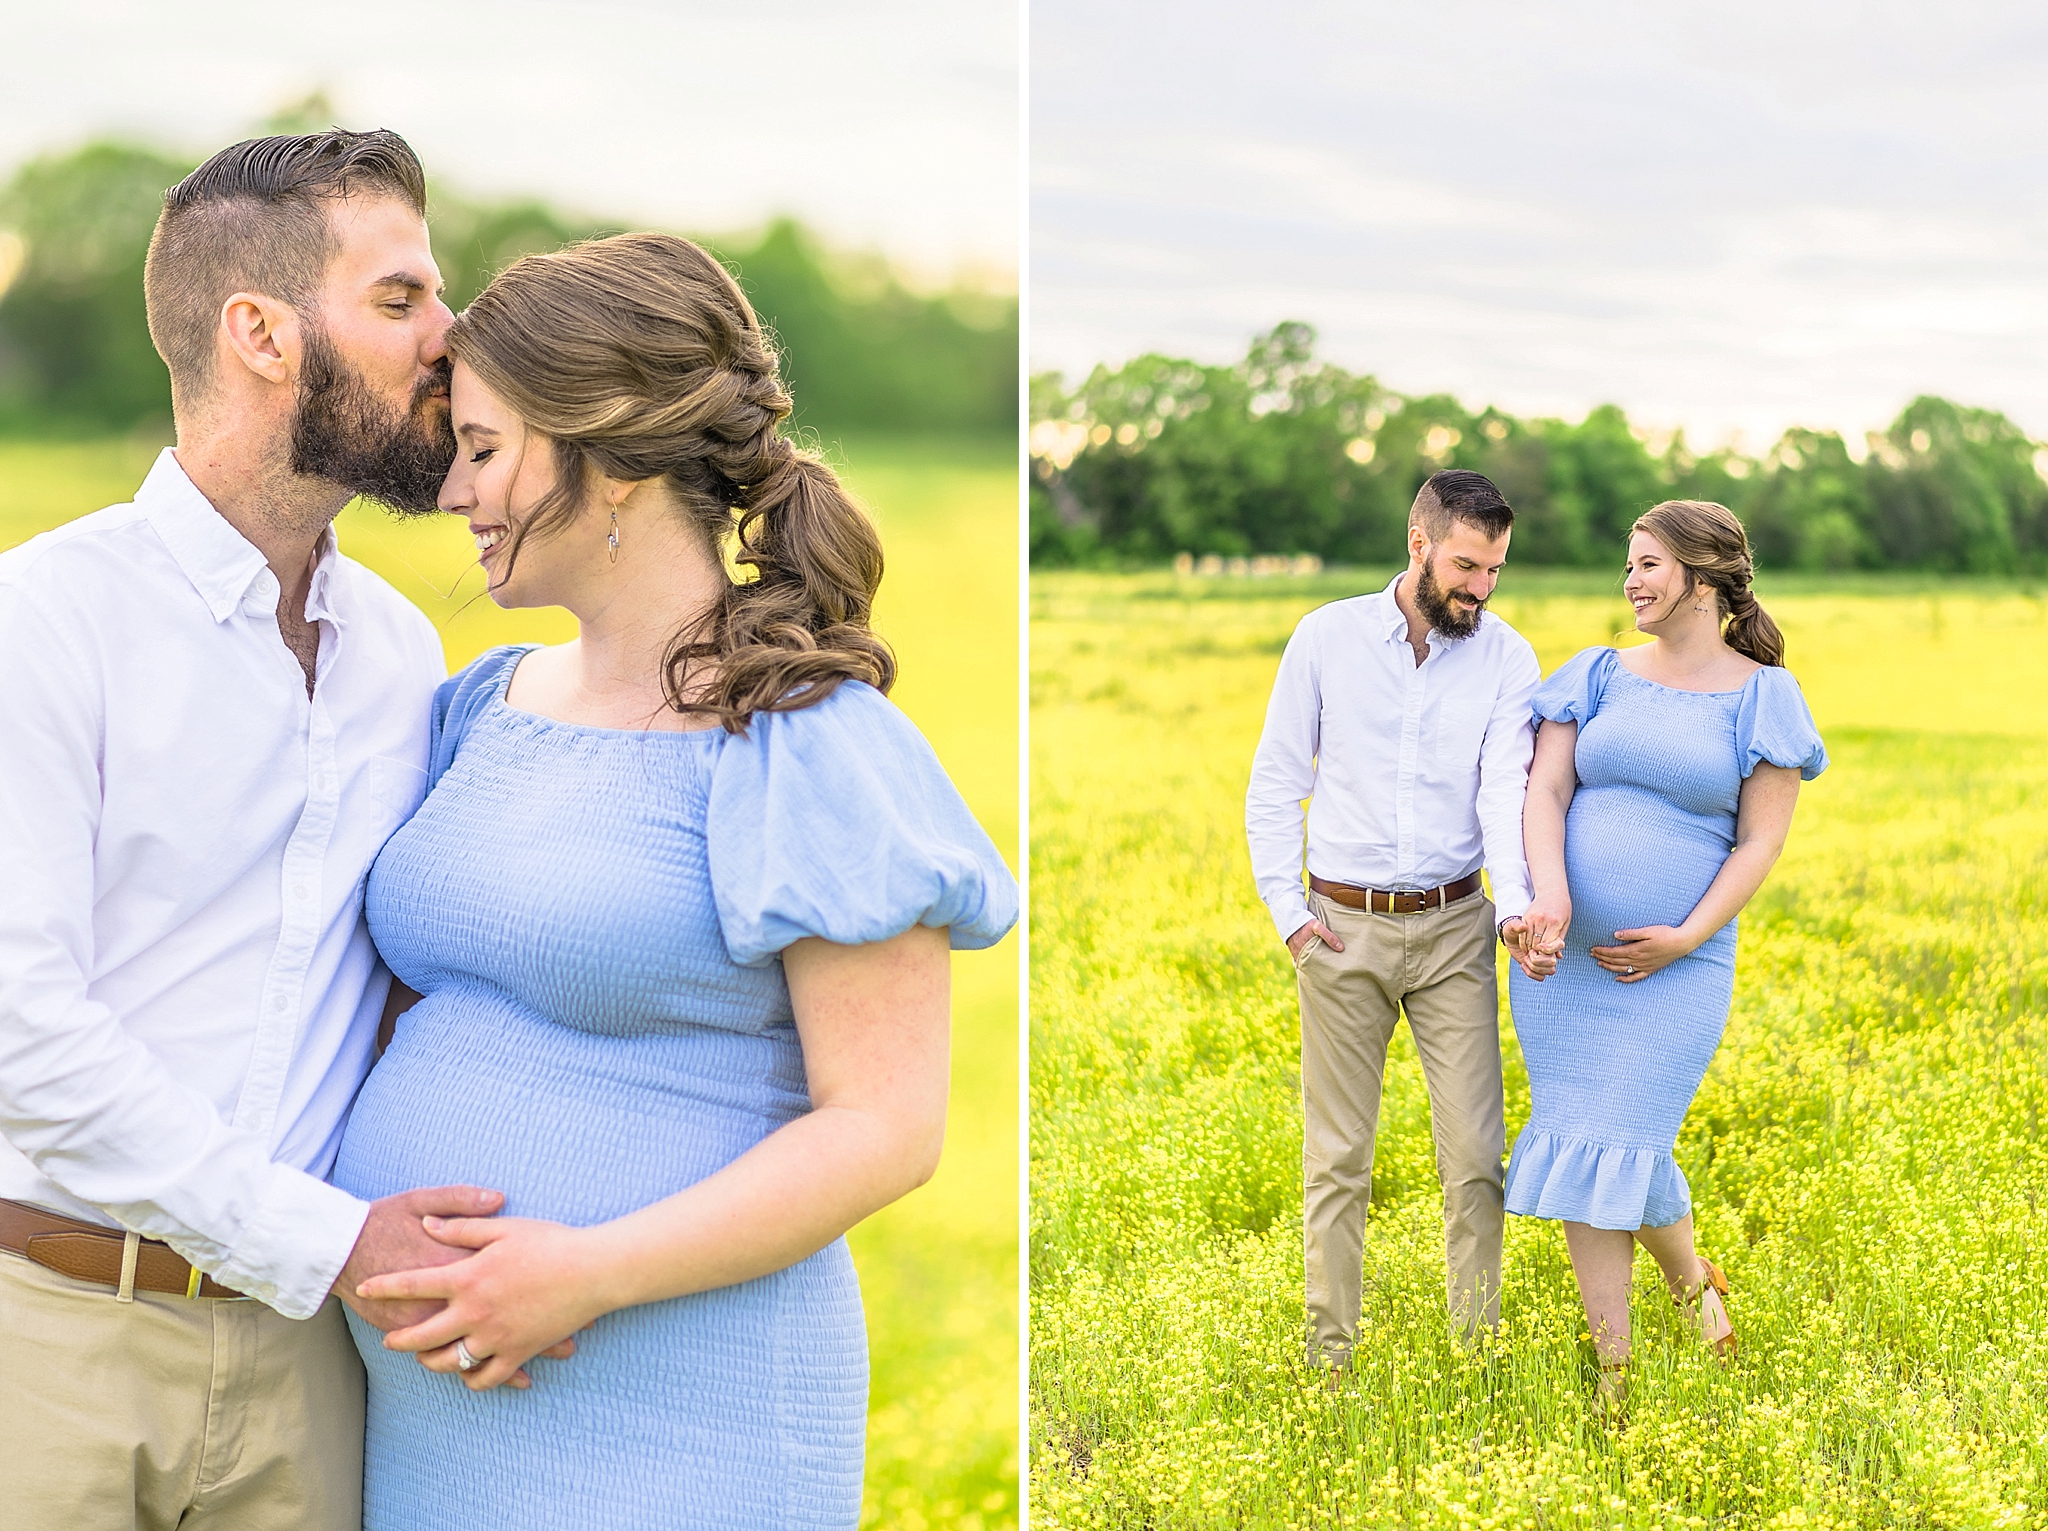 Keith & Lauren | A Virginia Flower Field Maternity